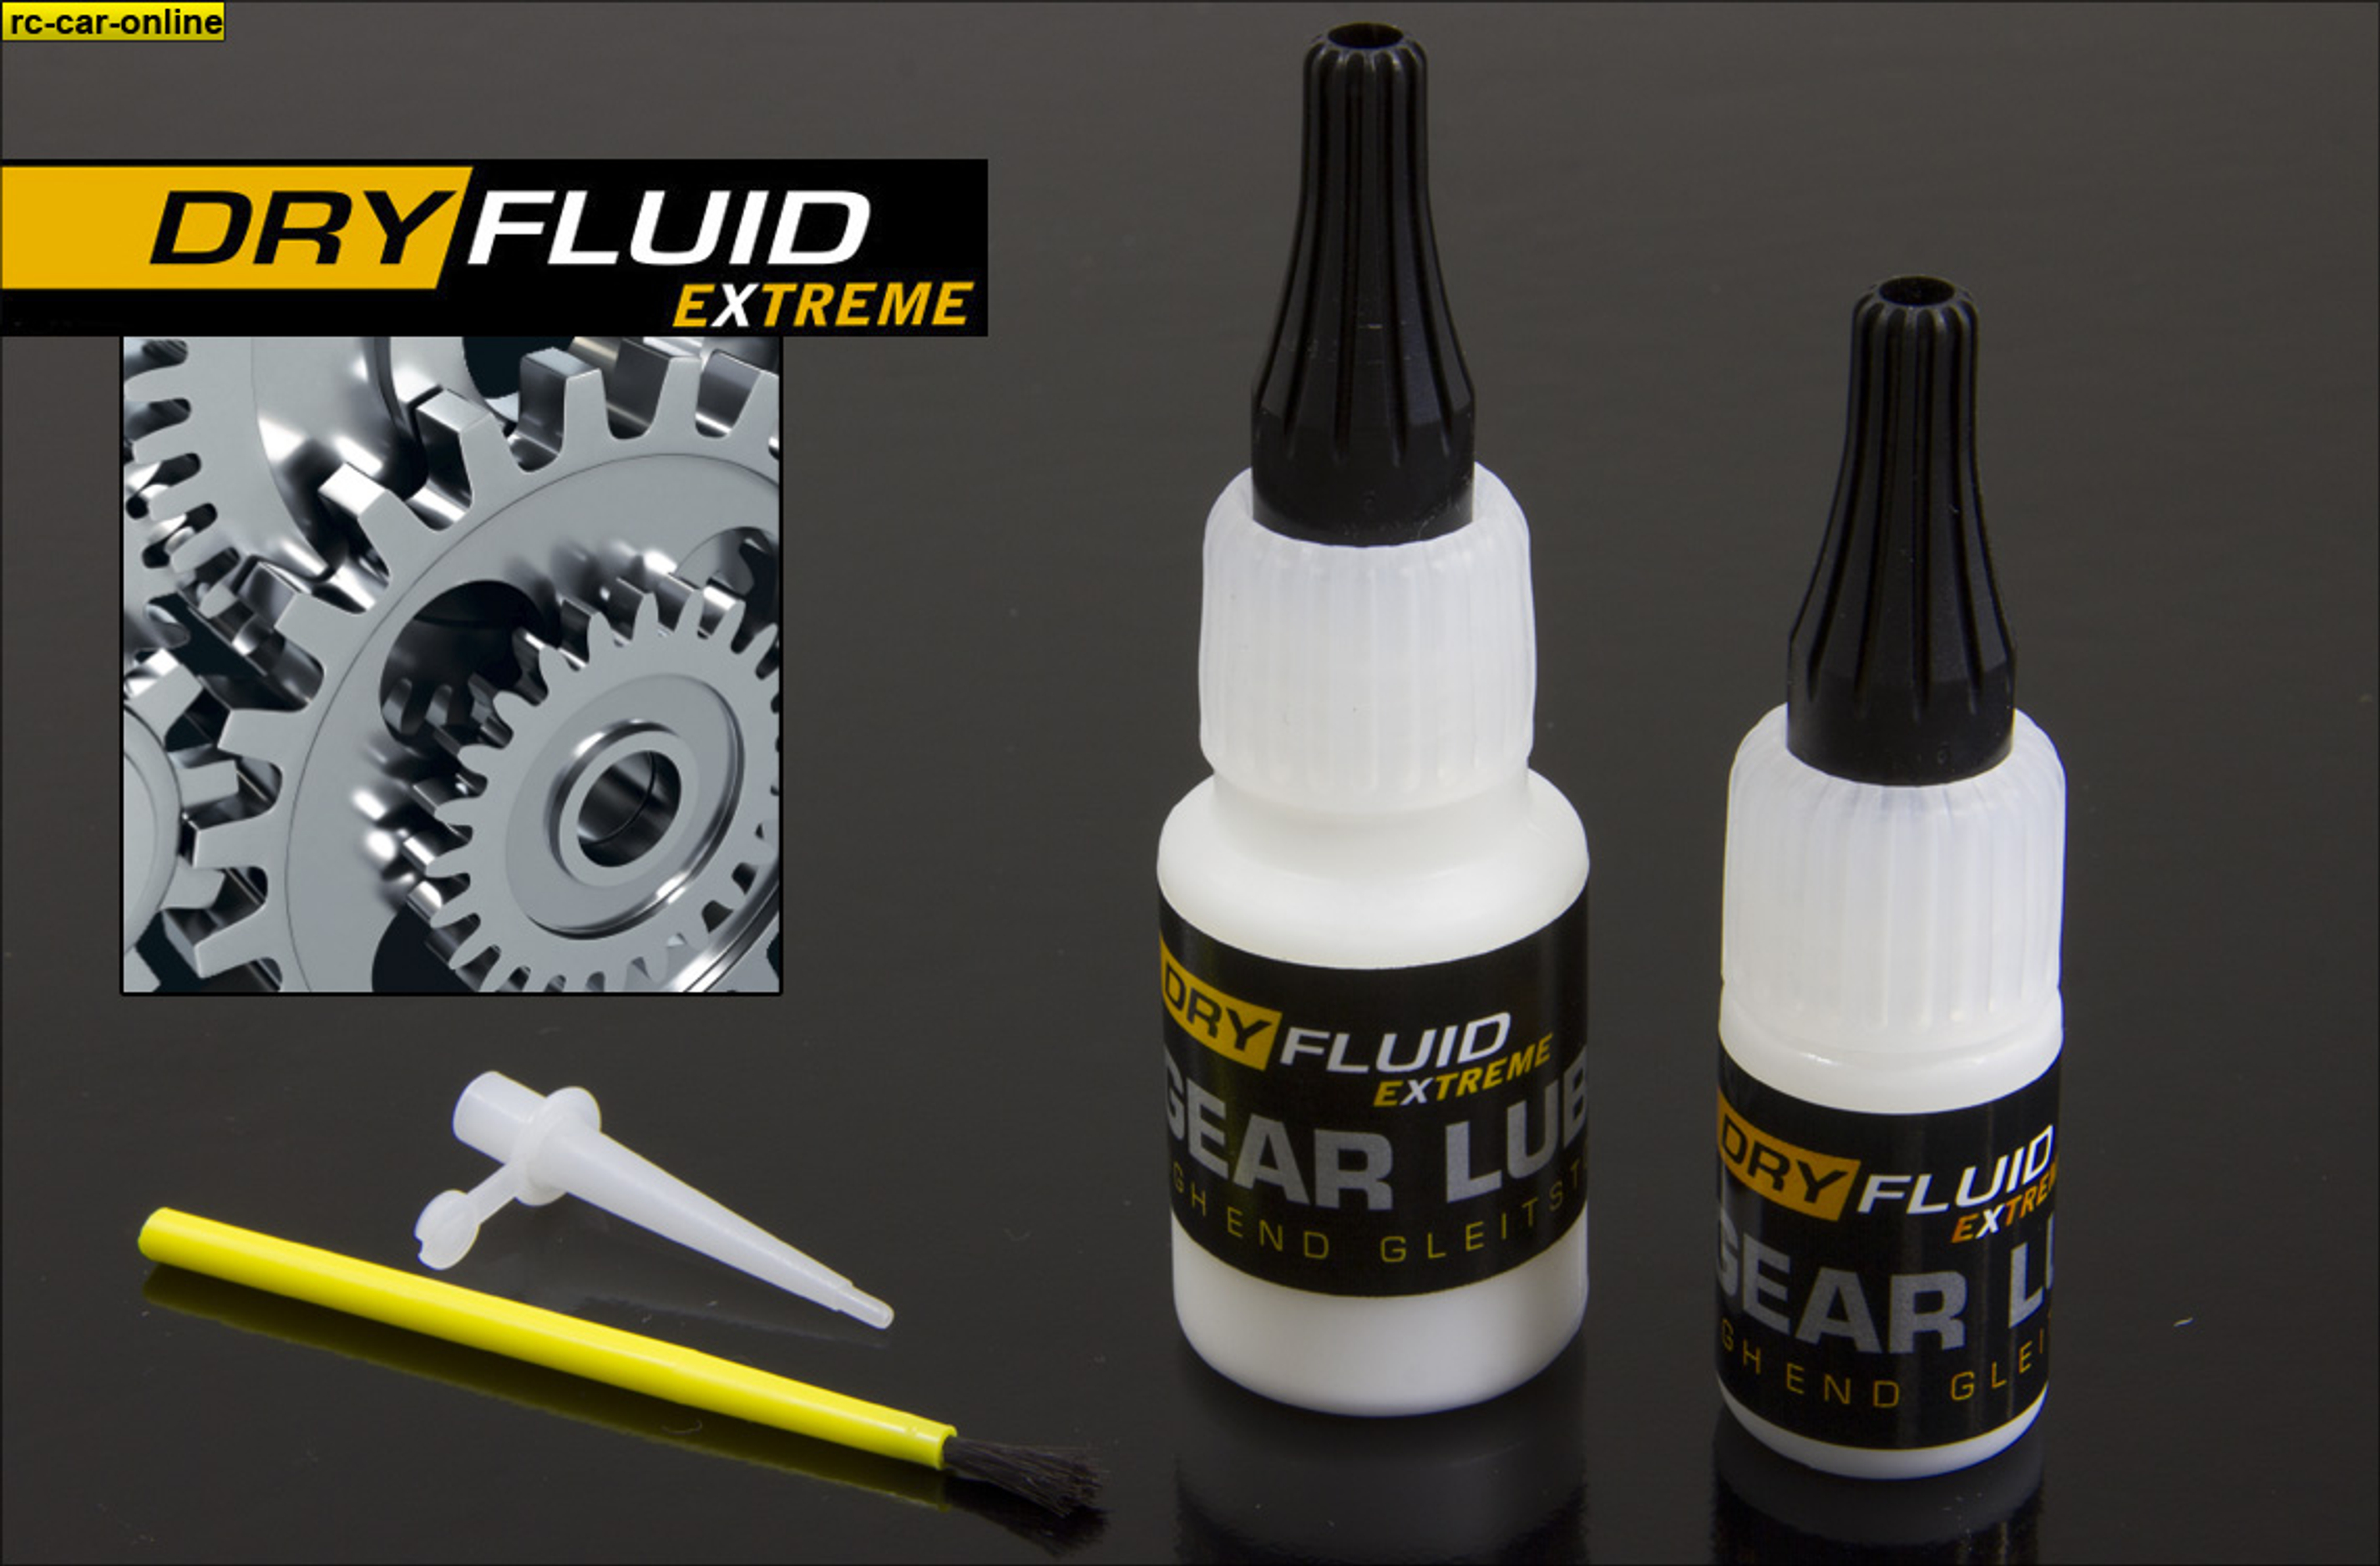 y0781/01 Dry-Fluid "Gear Lube" for gears, 10/20 ml